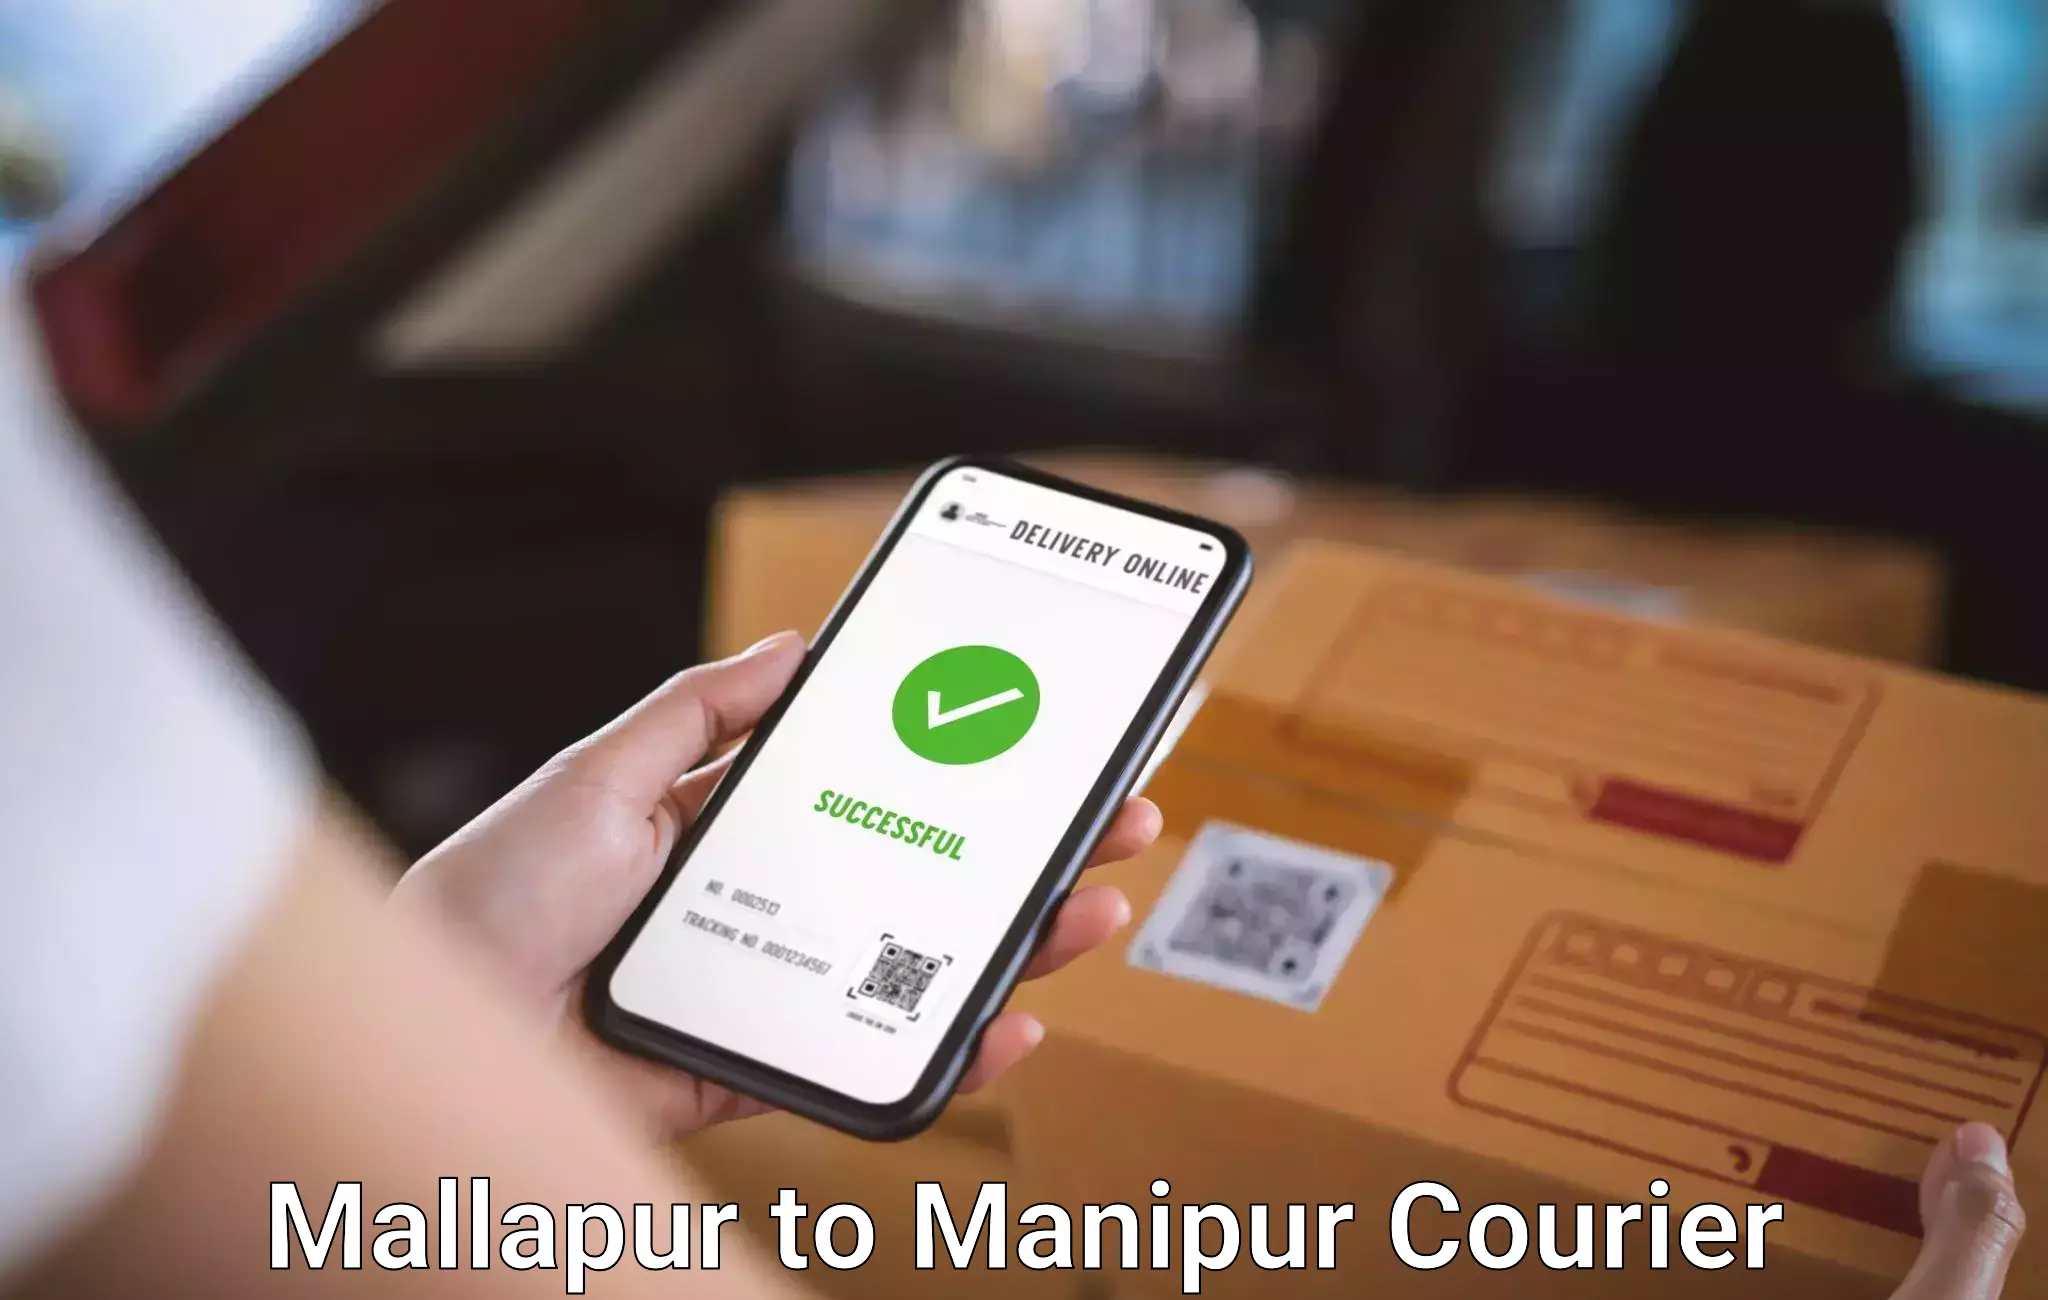 Baggage transport network Mallapur to Manipur